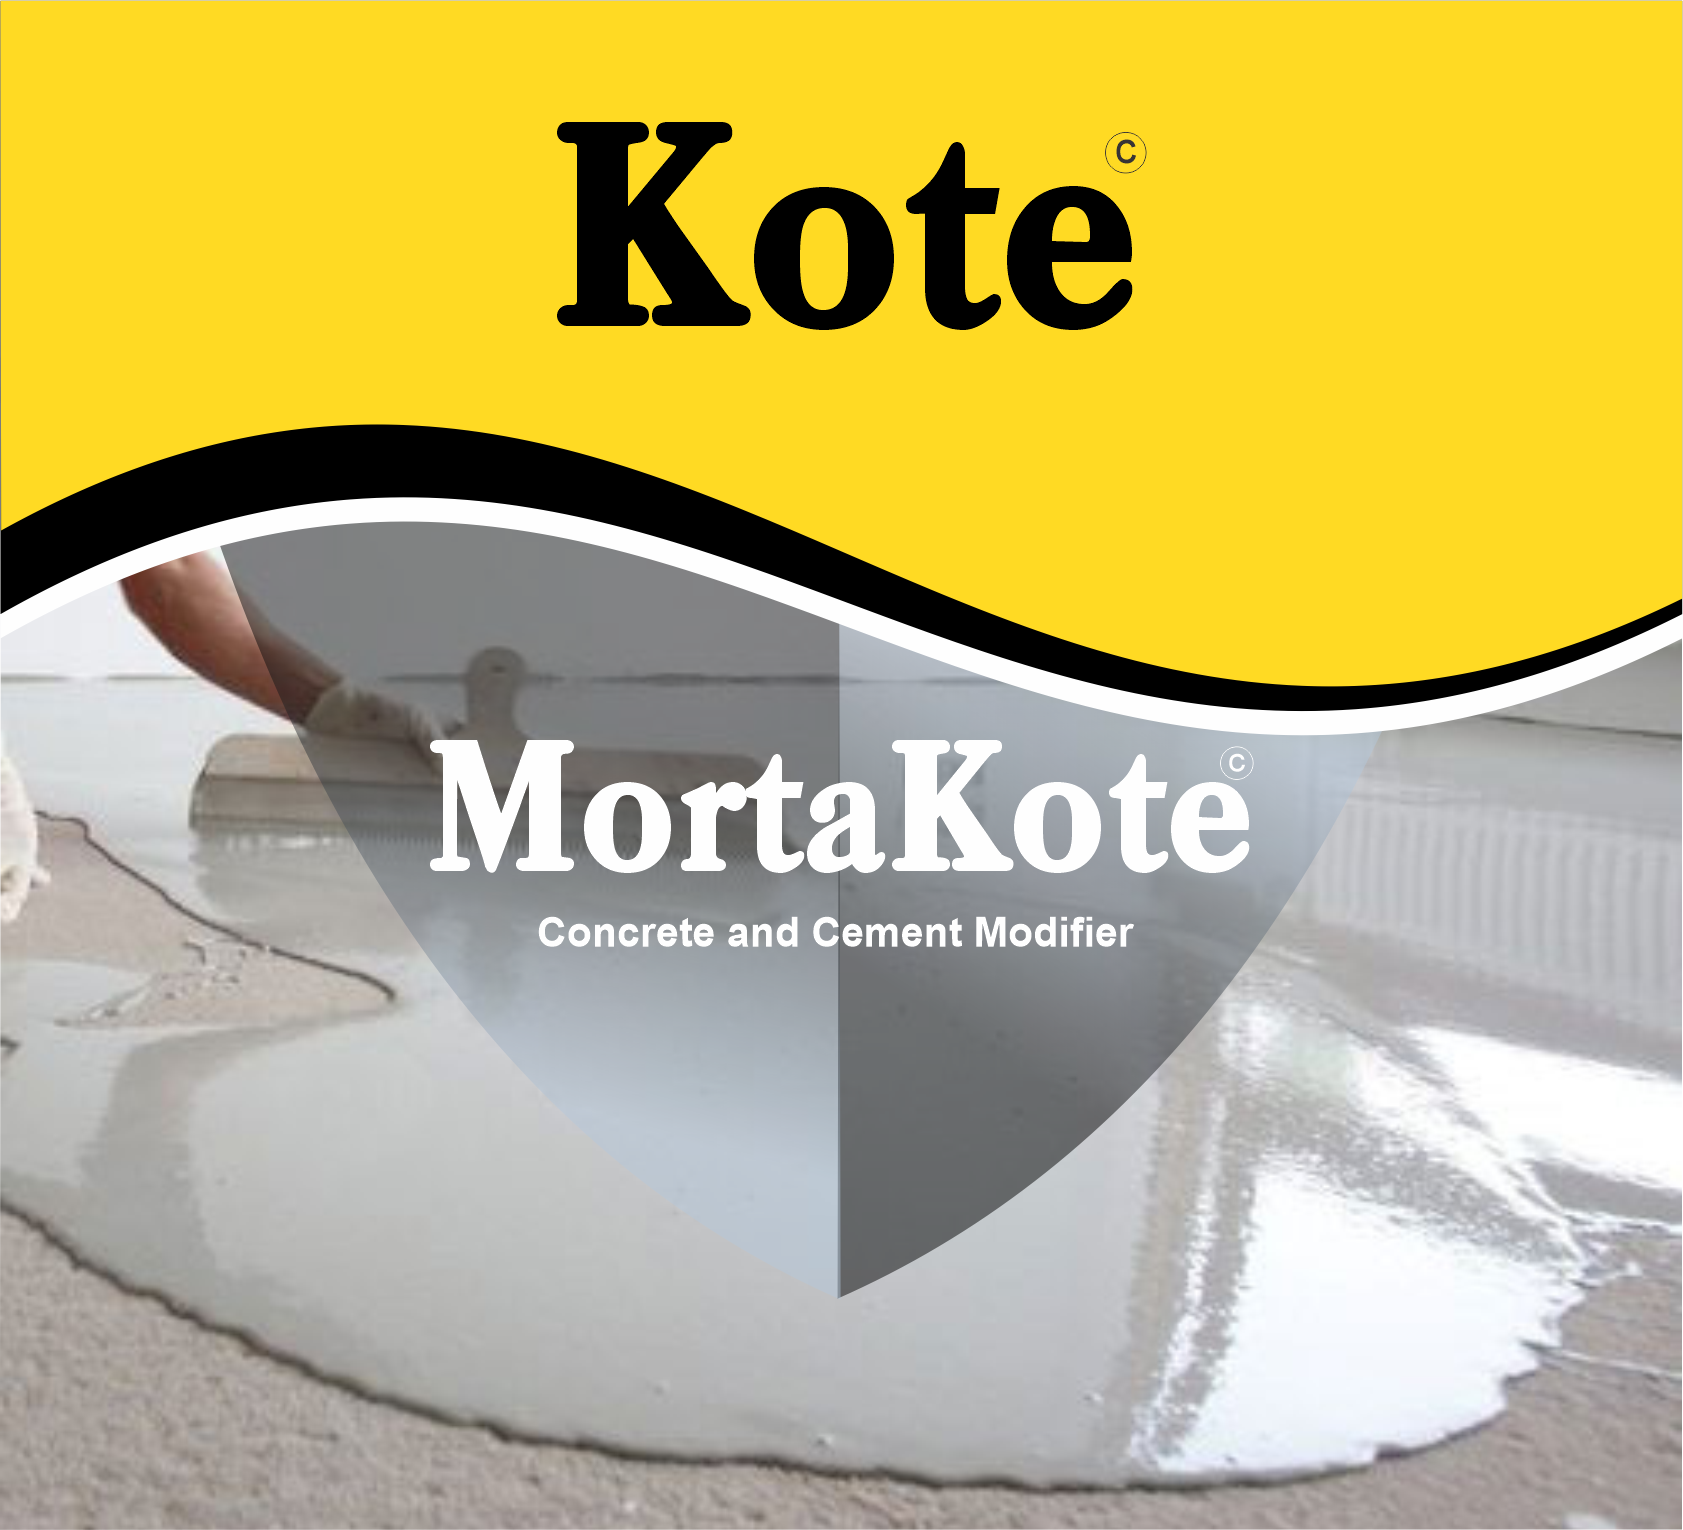 MortaKote label